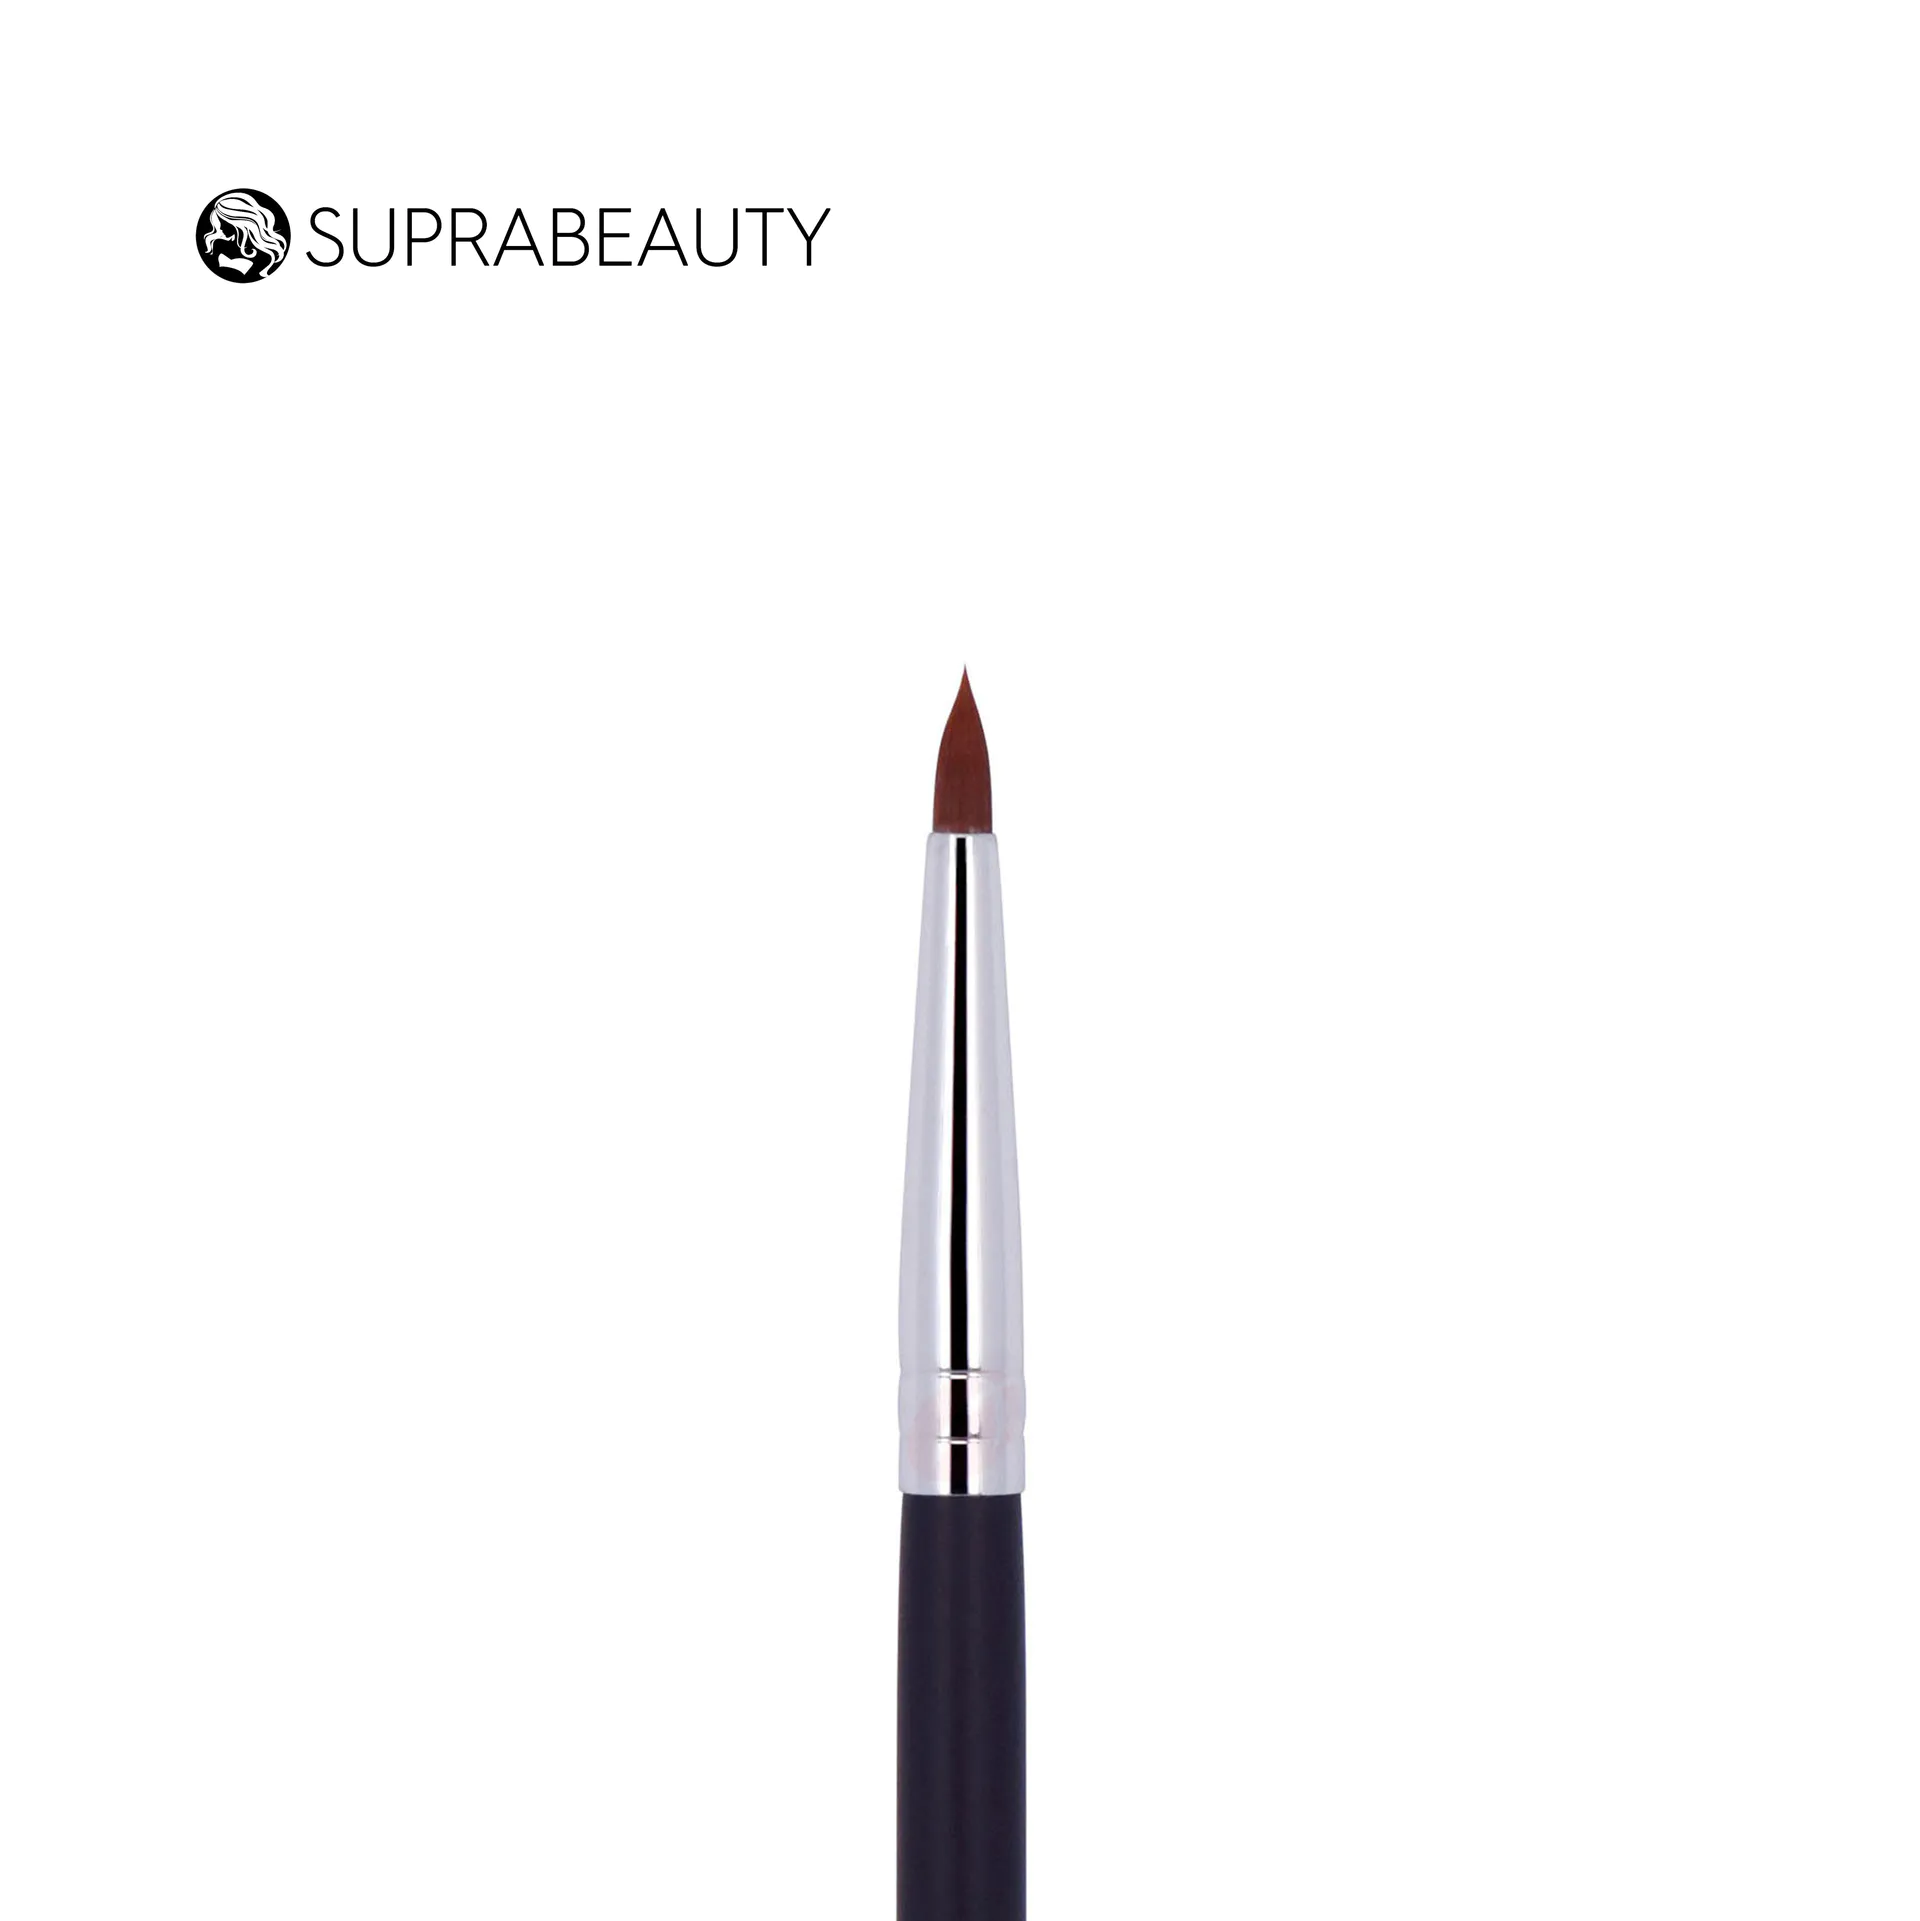 Bling makeup brushes custom logo eyeshadow make up brush professional lip brush